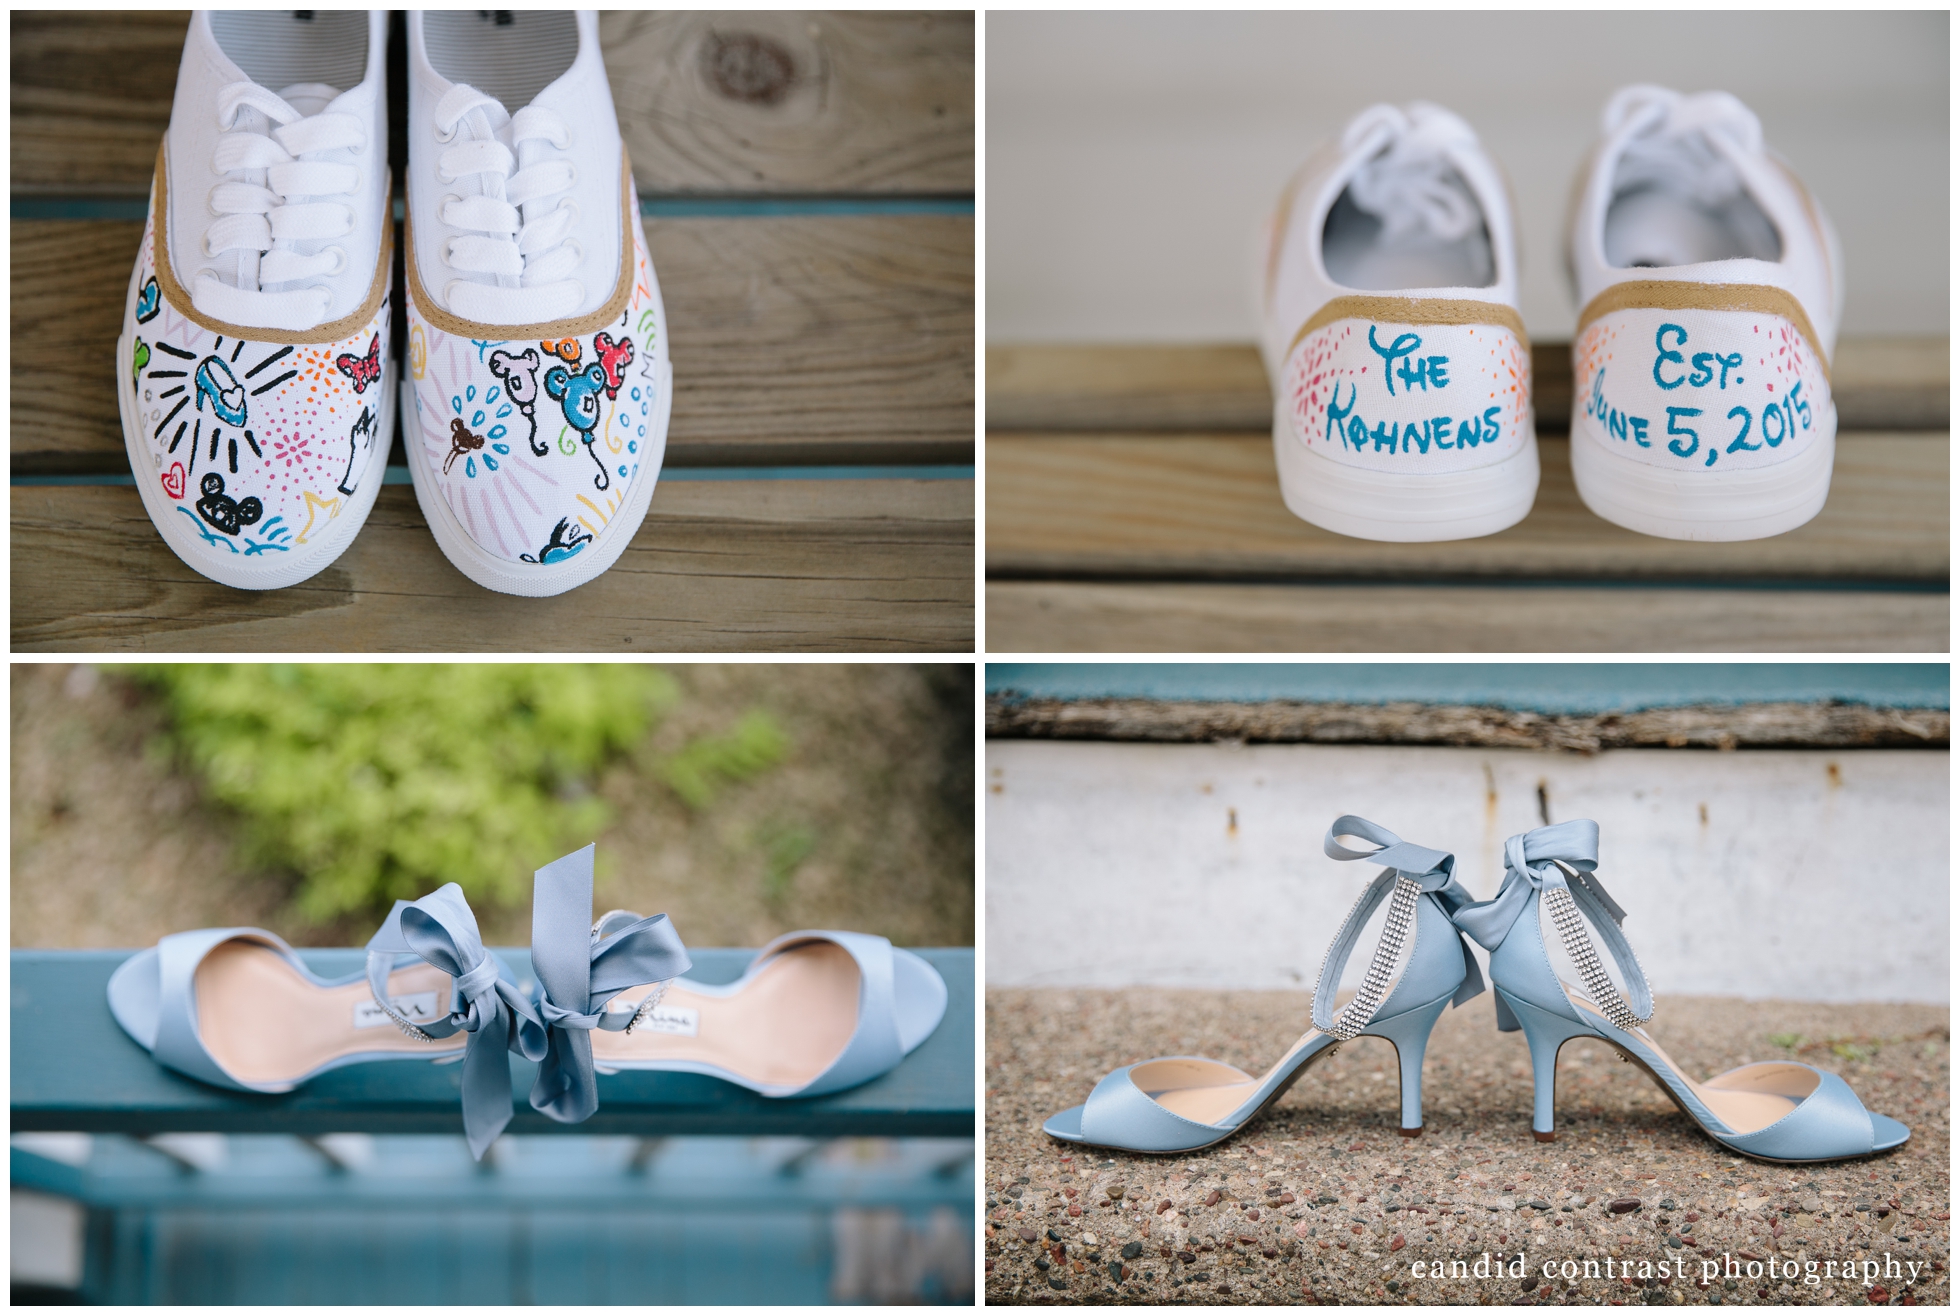 custom wedding shoes, something blue heels at dubuque, ia wedding, candid contrast photography